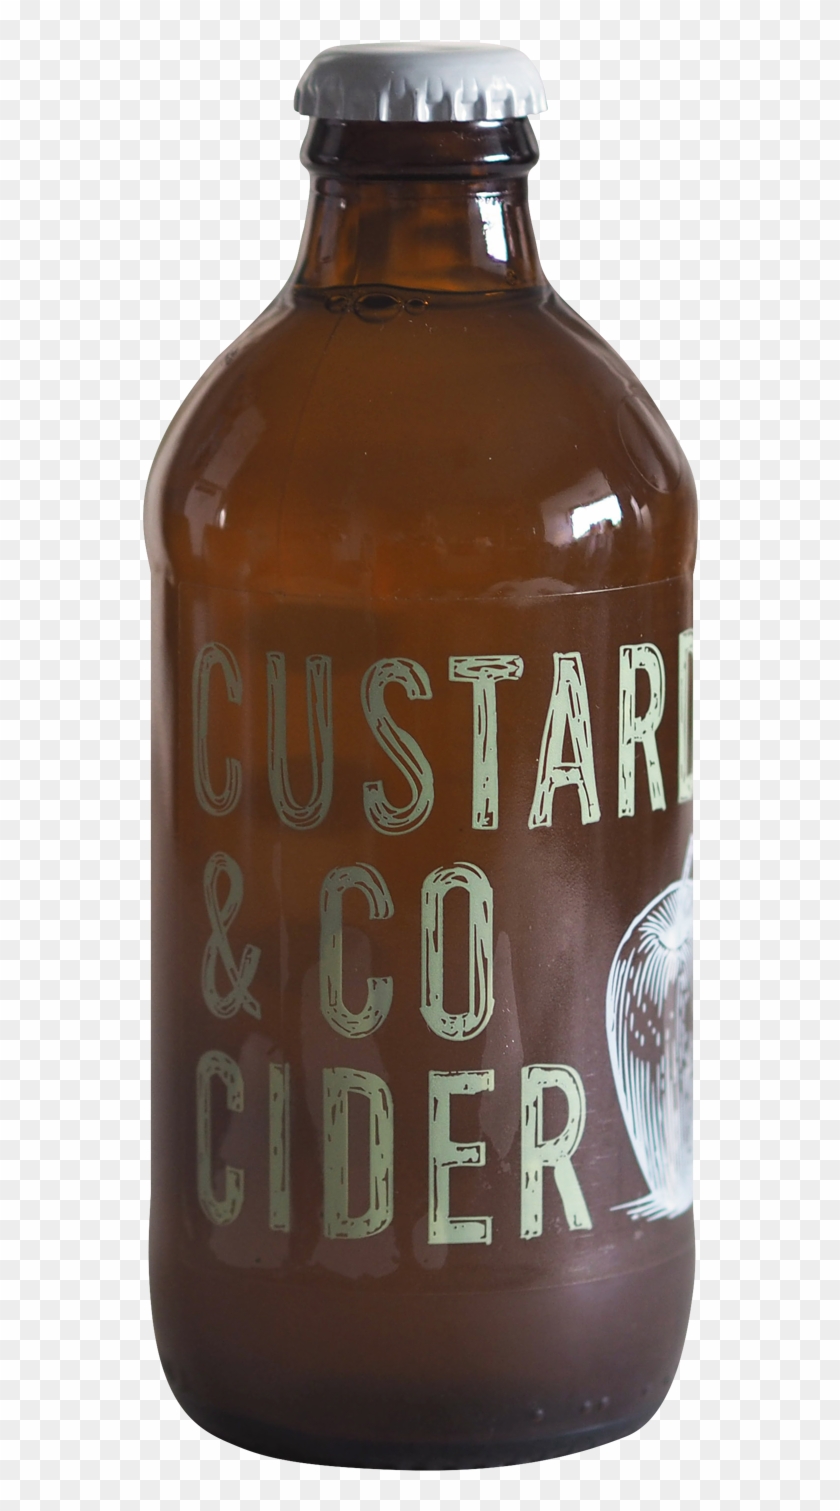 Custard & Co Scrumpy Apple Cider 330ml - Glass Bottle Clipart #4121078